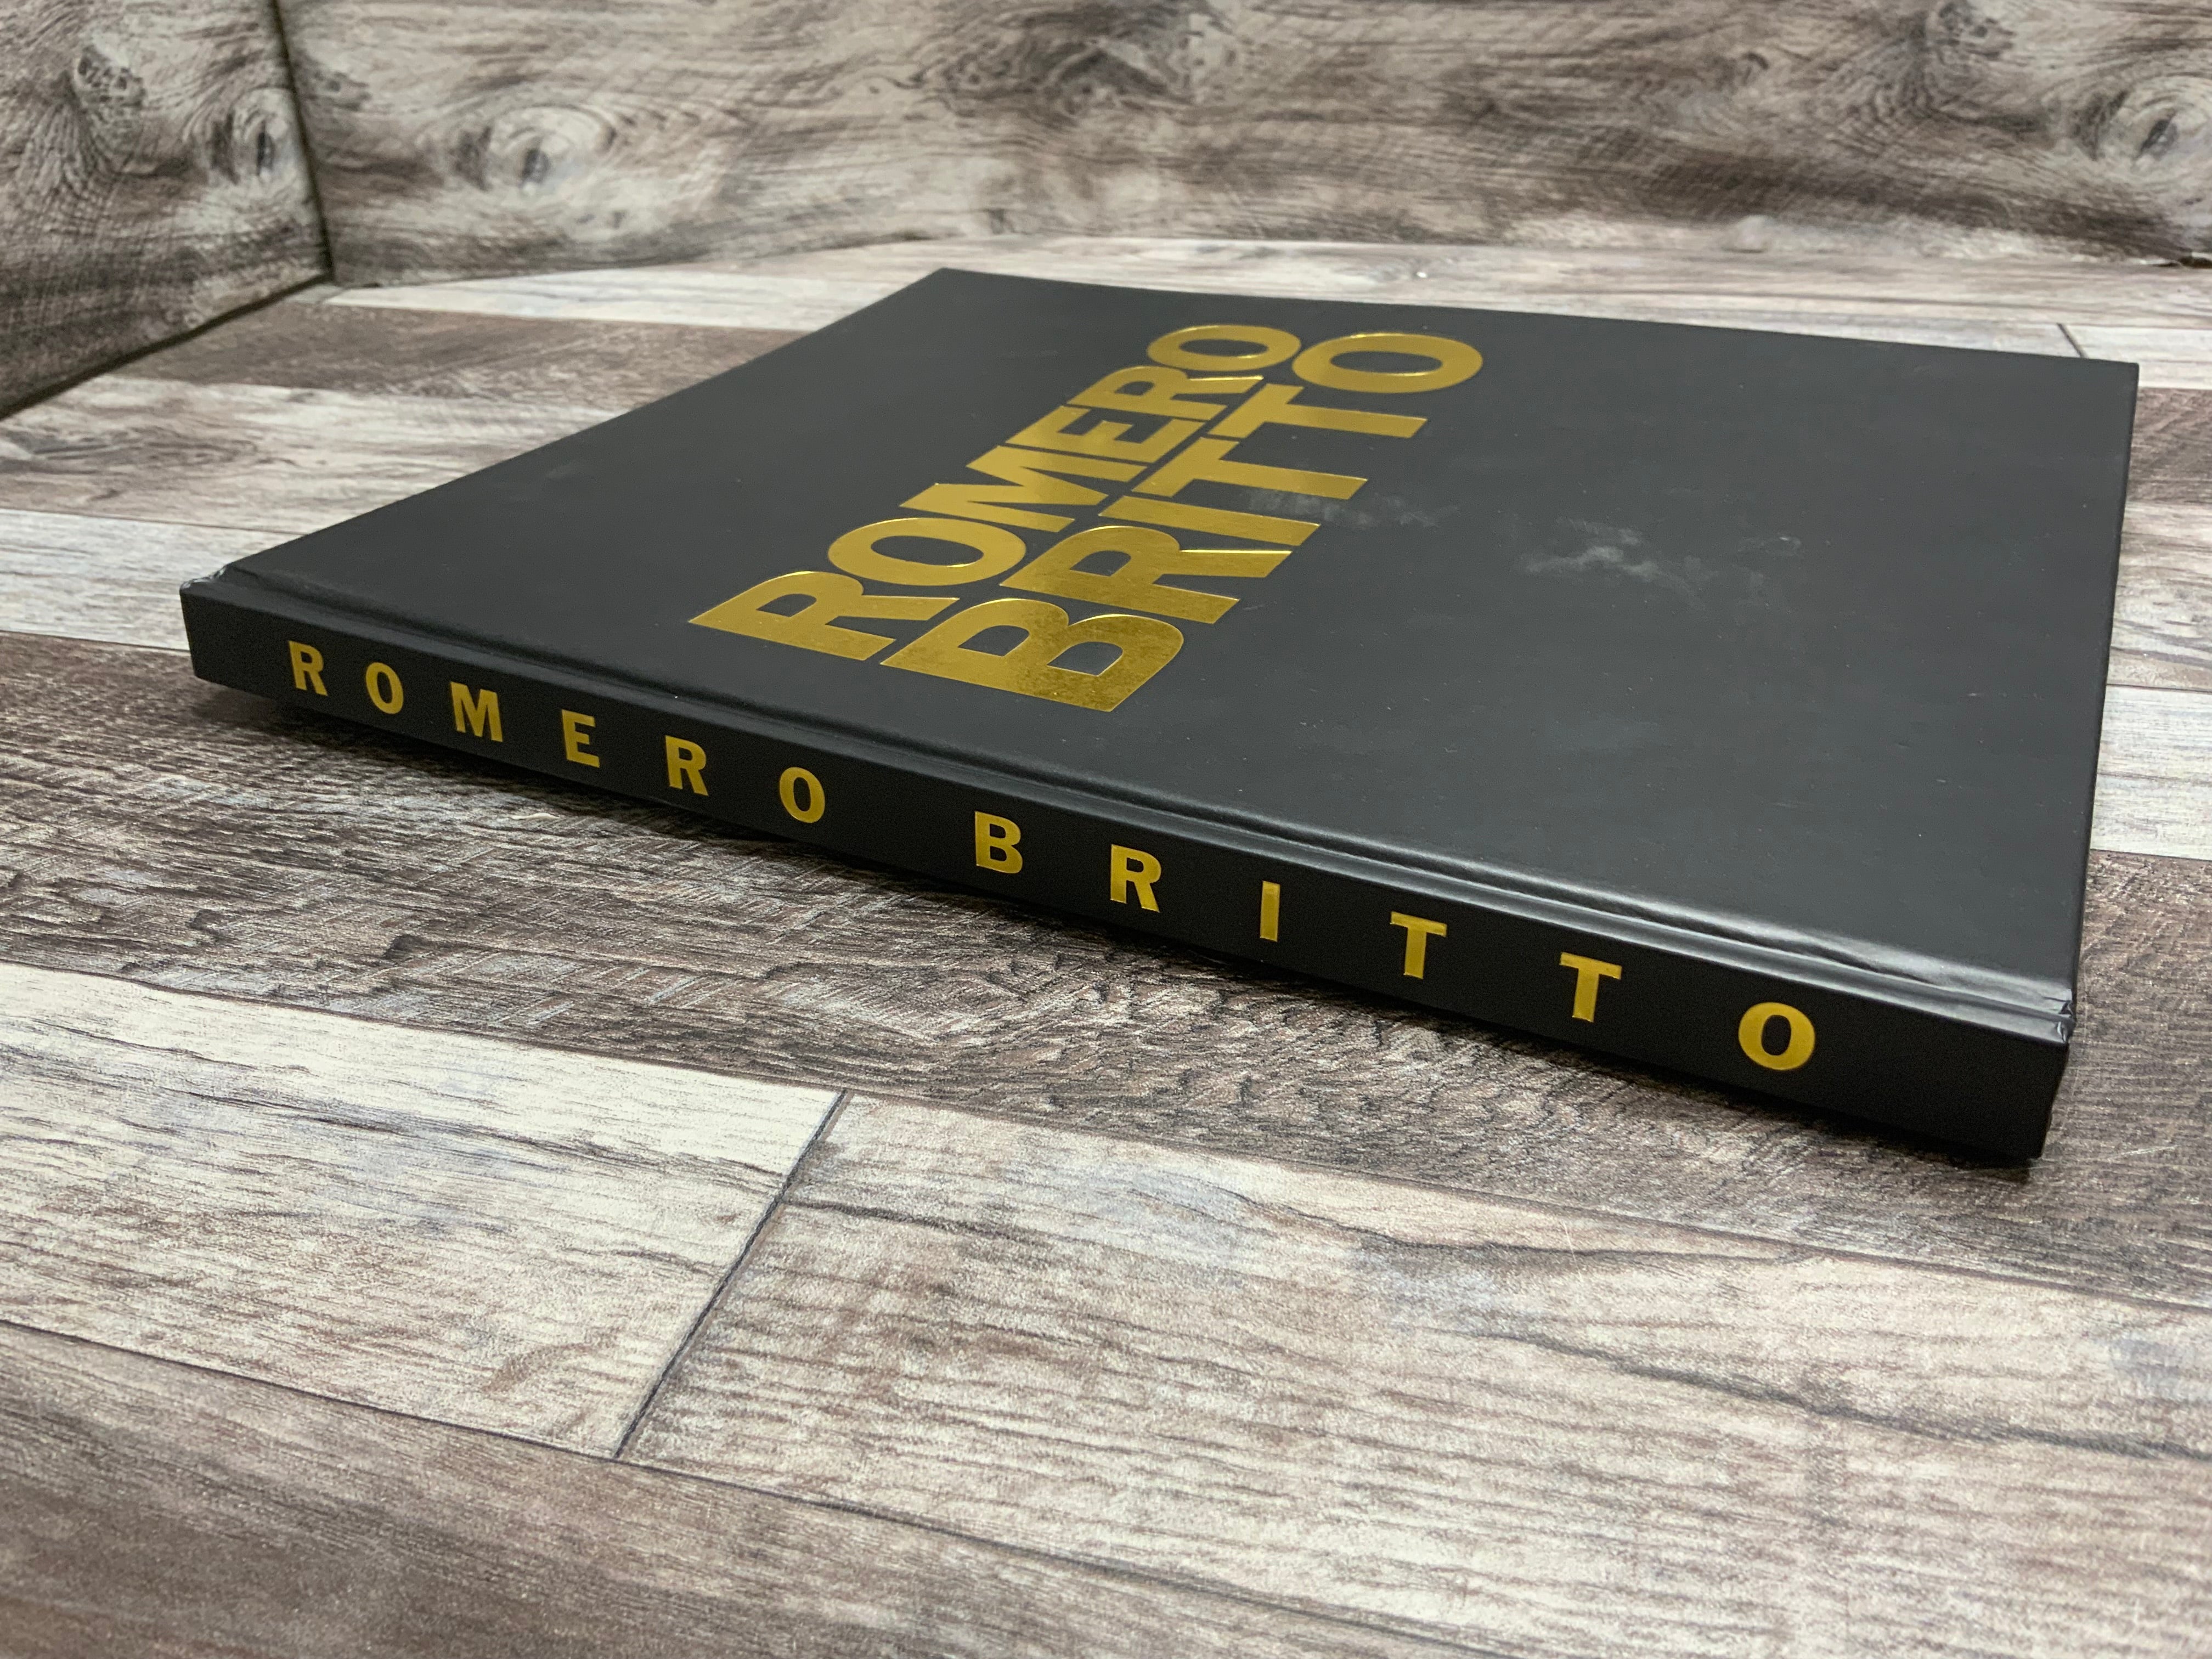 Britto Choice Of Romero Coffee Table Book MVP (BLACK BOOK) (8214021144814)